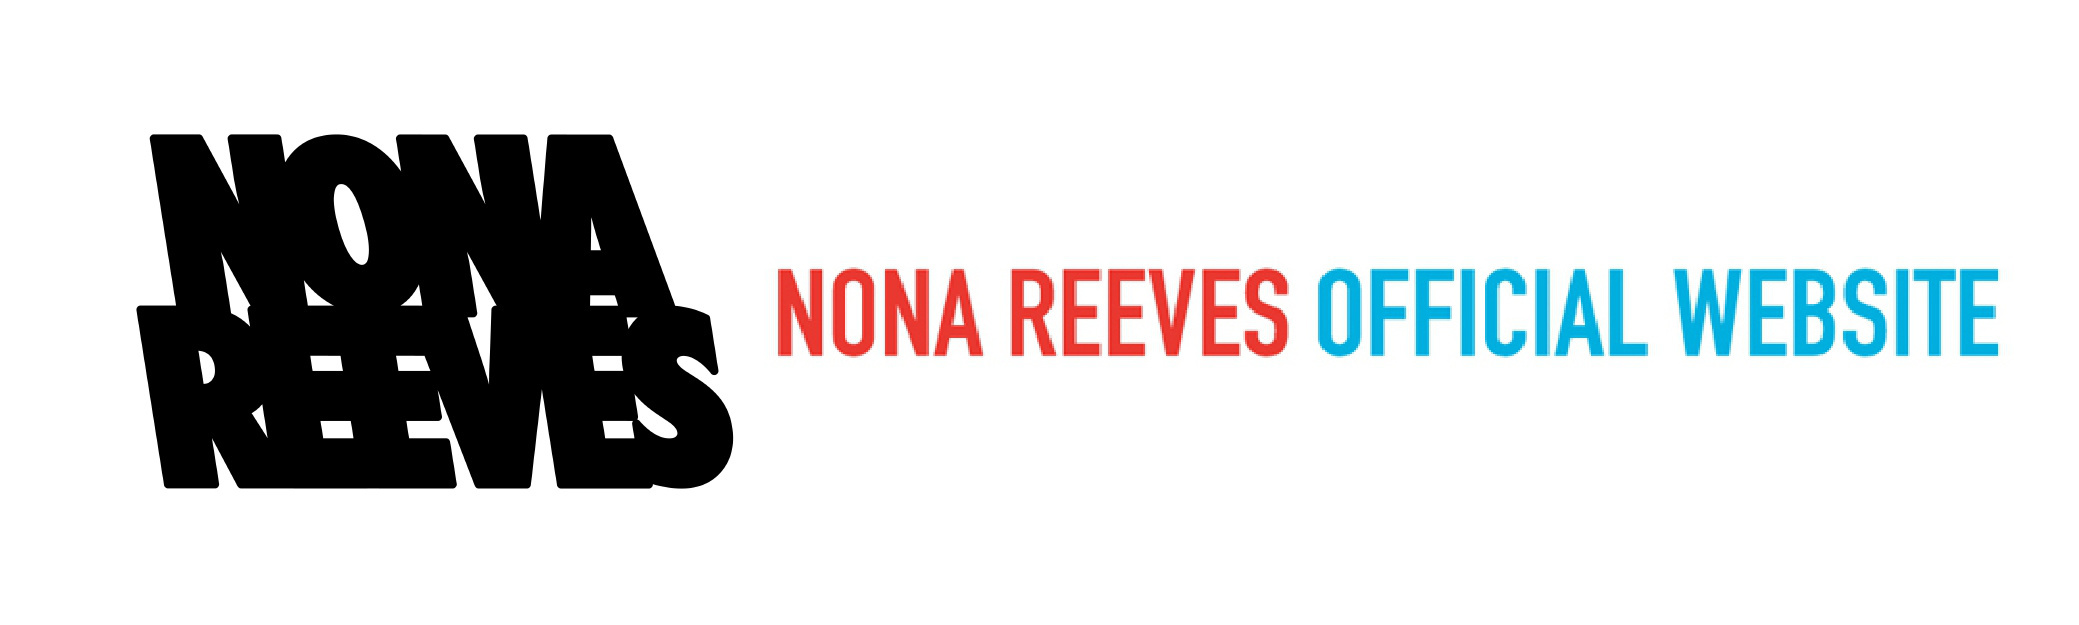 Topics - NONA REEVES Official Website